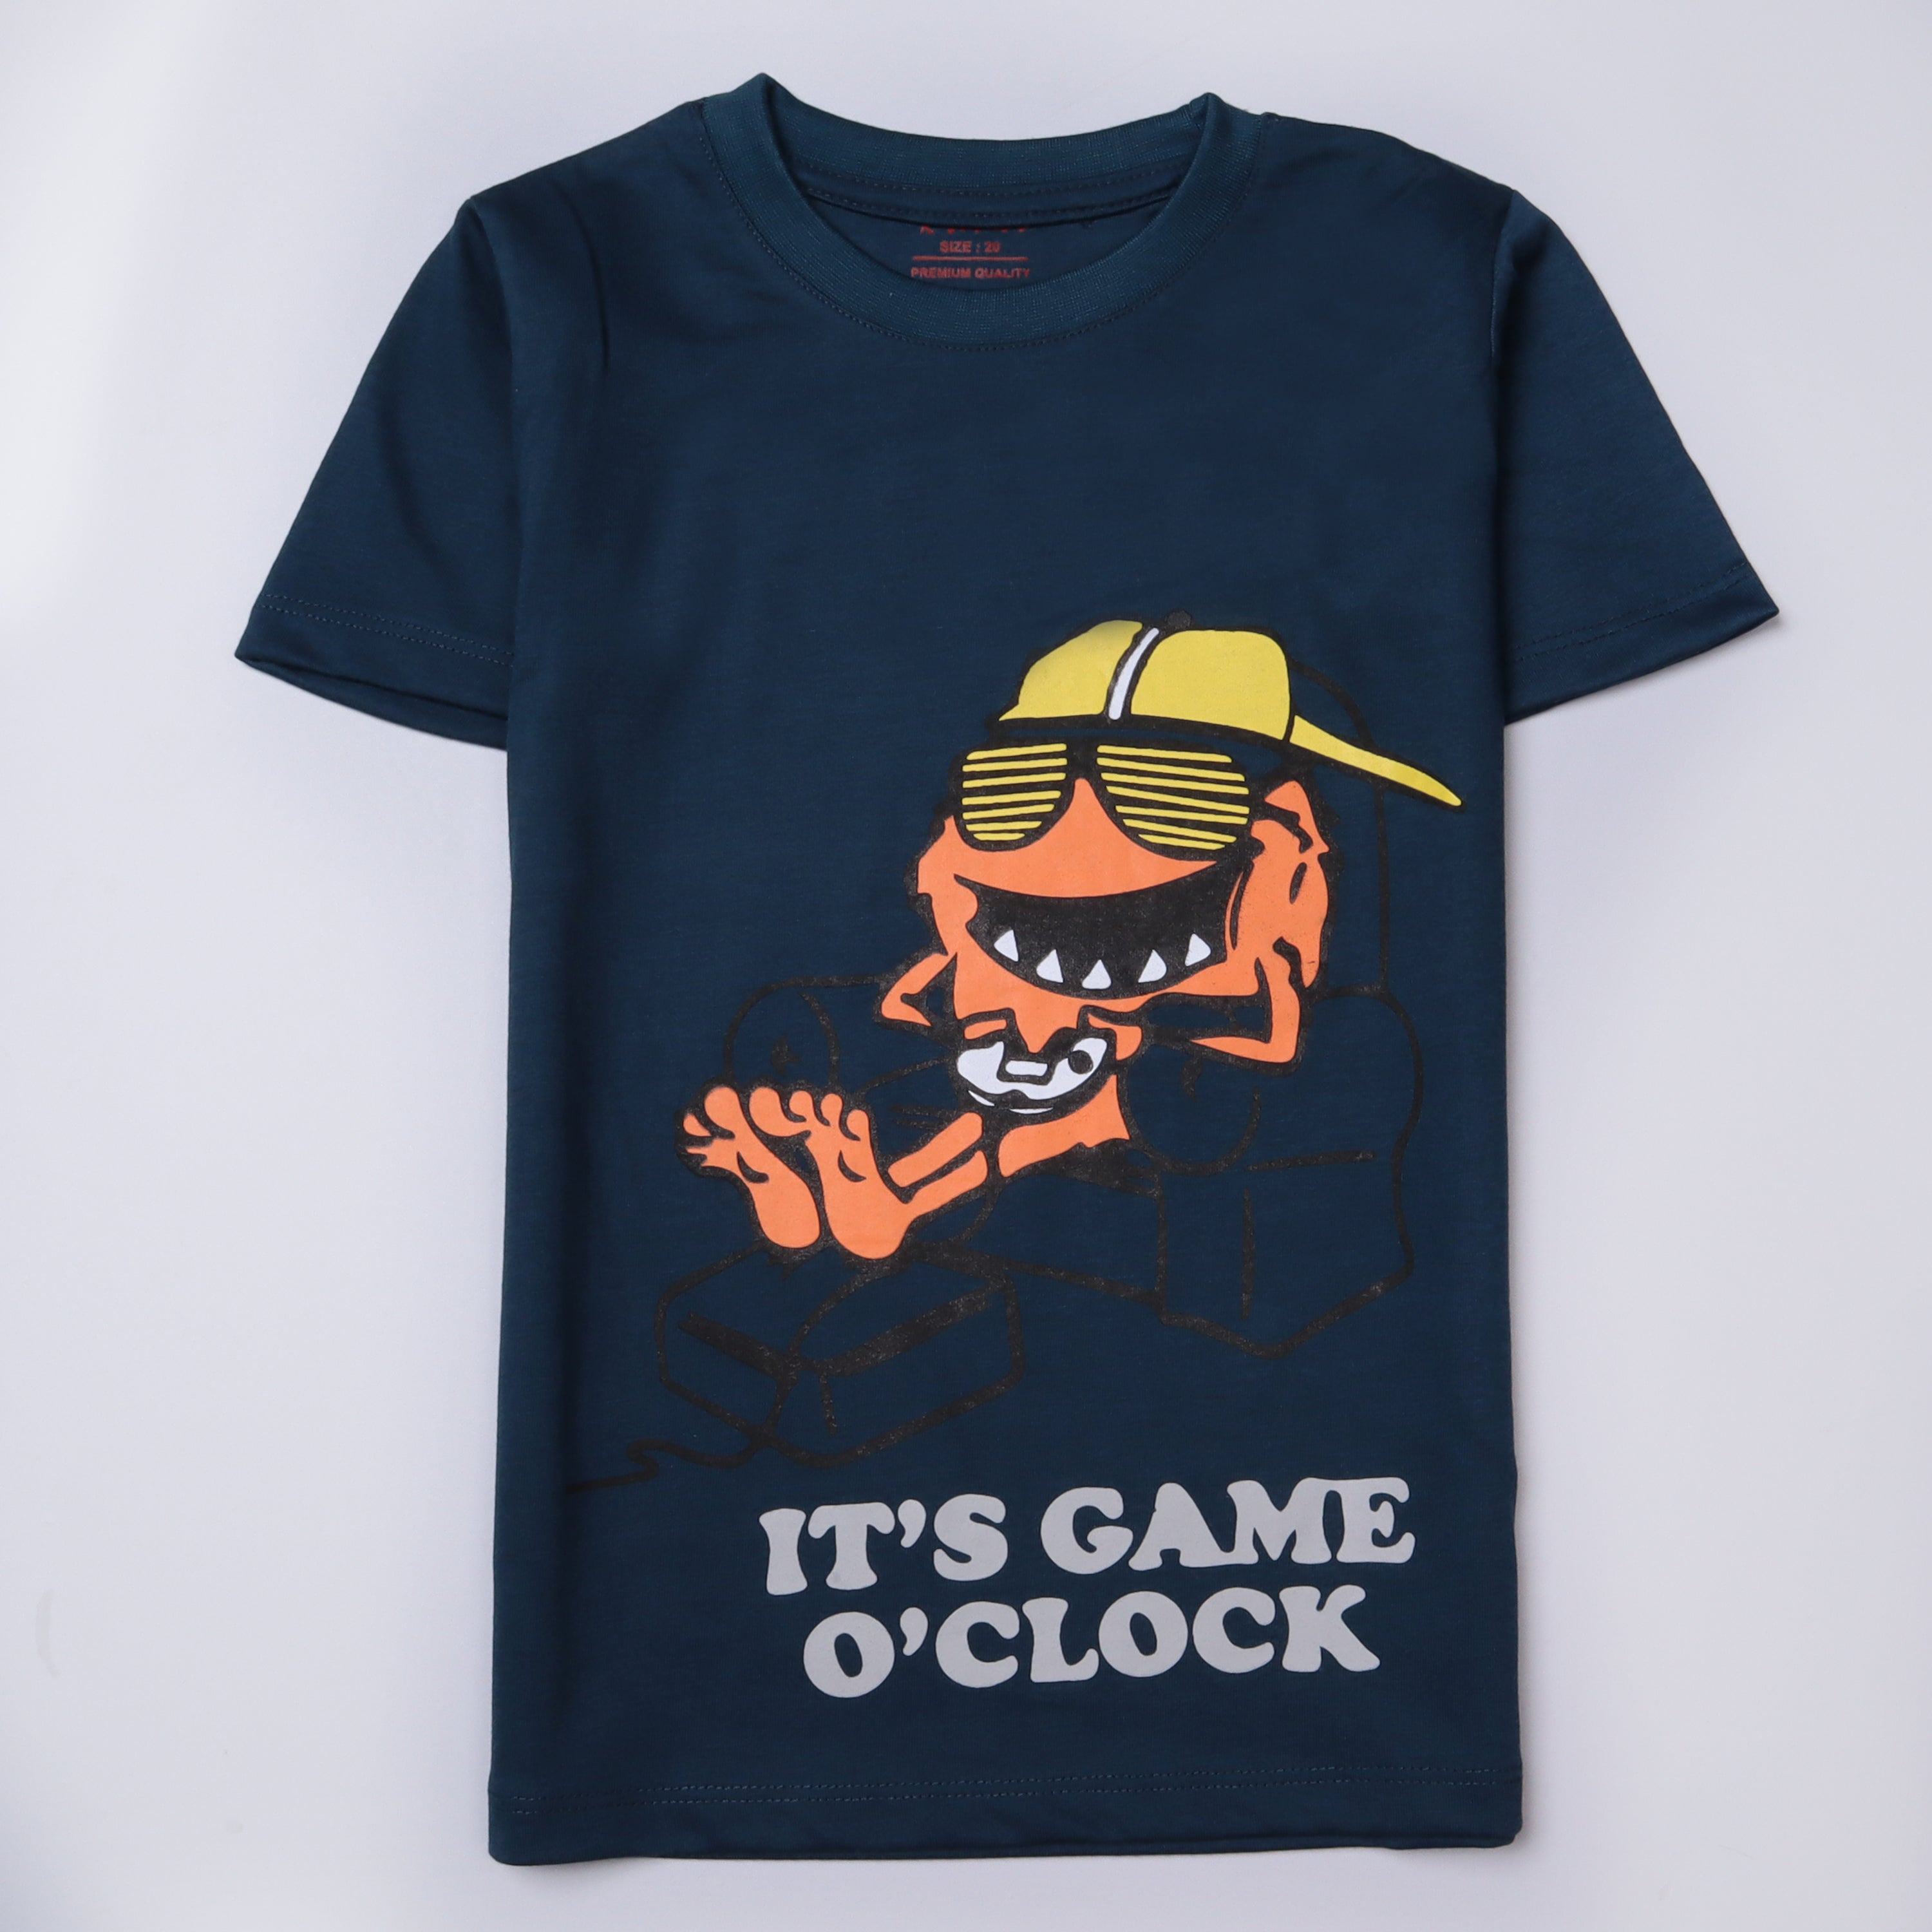 Boys Half Sleeves-Printed T-Shirt (Game2)